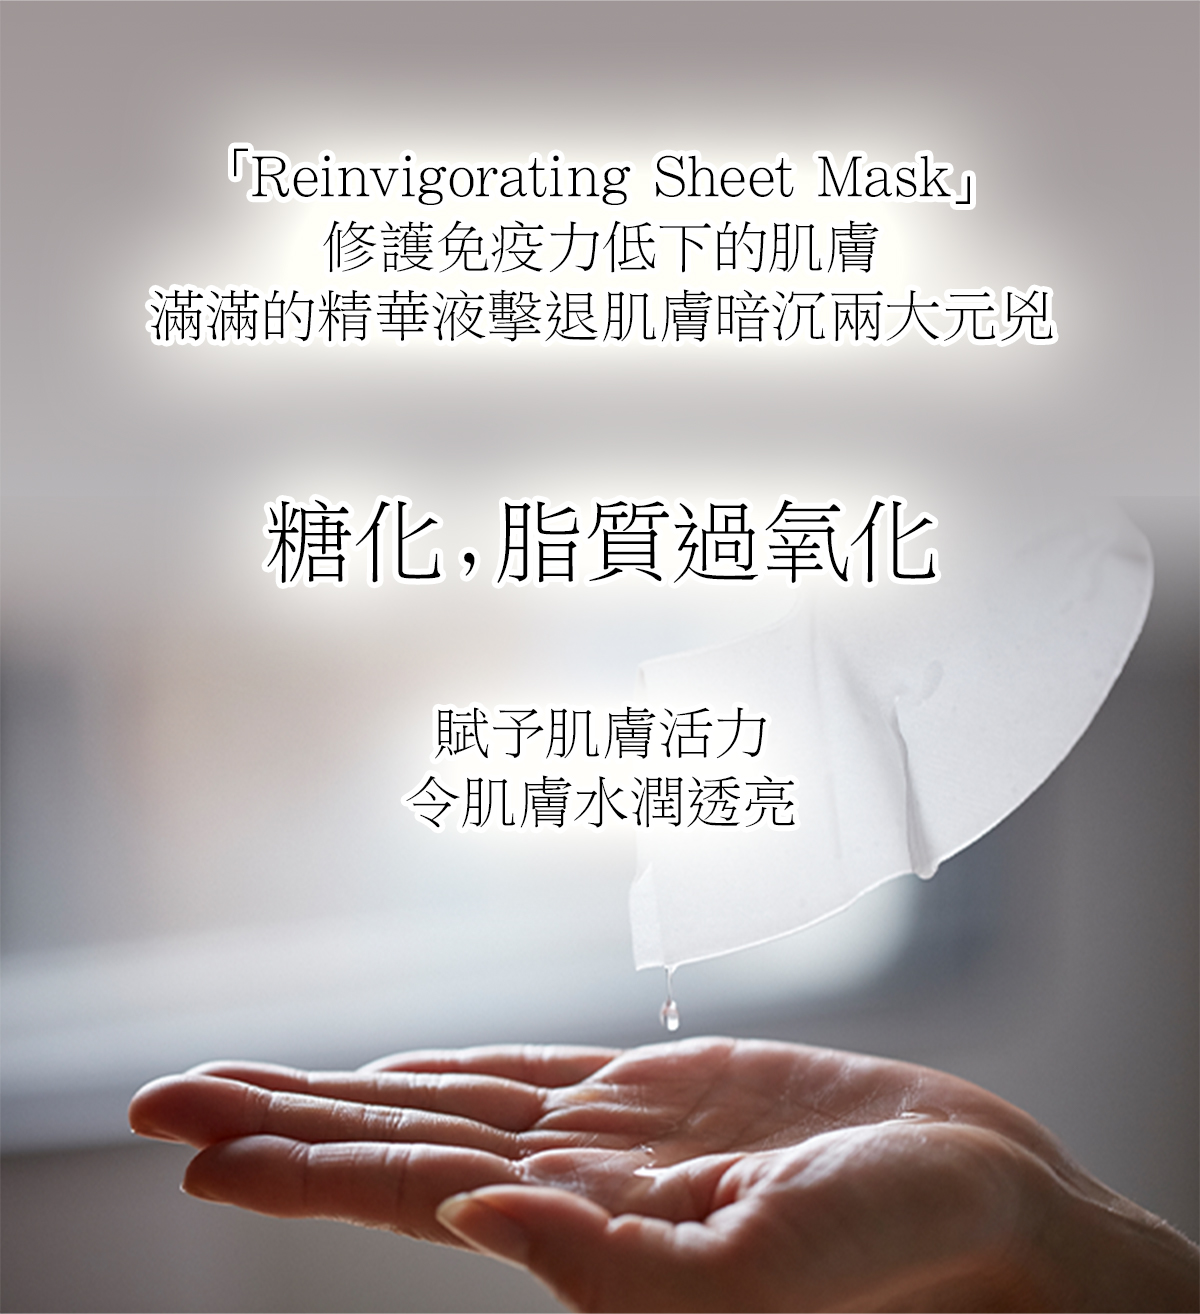 「Reinvigorating Sheet Mask」修護免疫力低下的肌膚 滿滿的精華液擊退肌膚暗沉兩大元兇 糖化，脂質過氧化 賦予肌膚活力 令肌膚水潤透亮